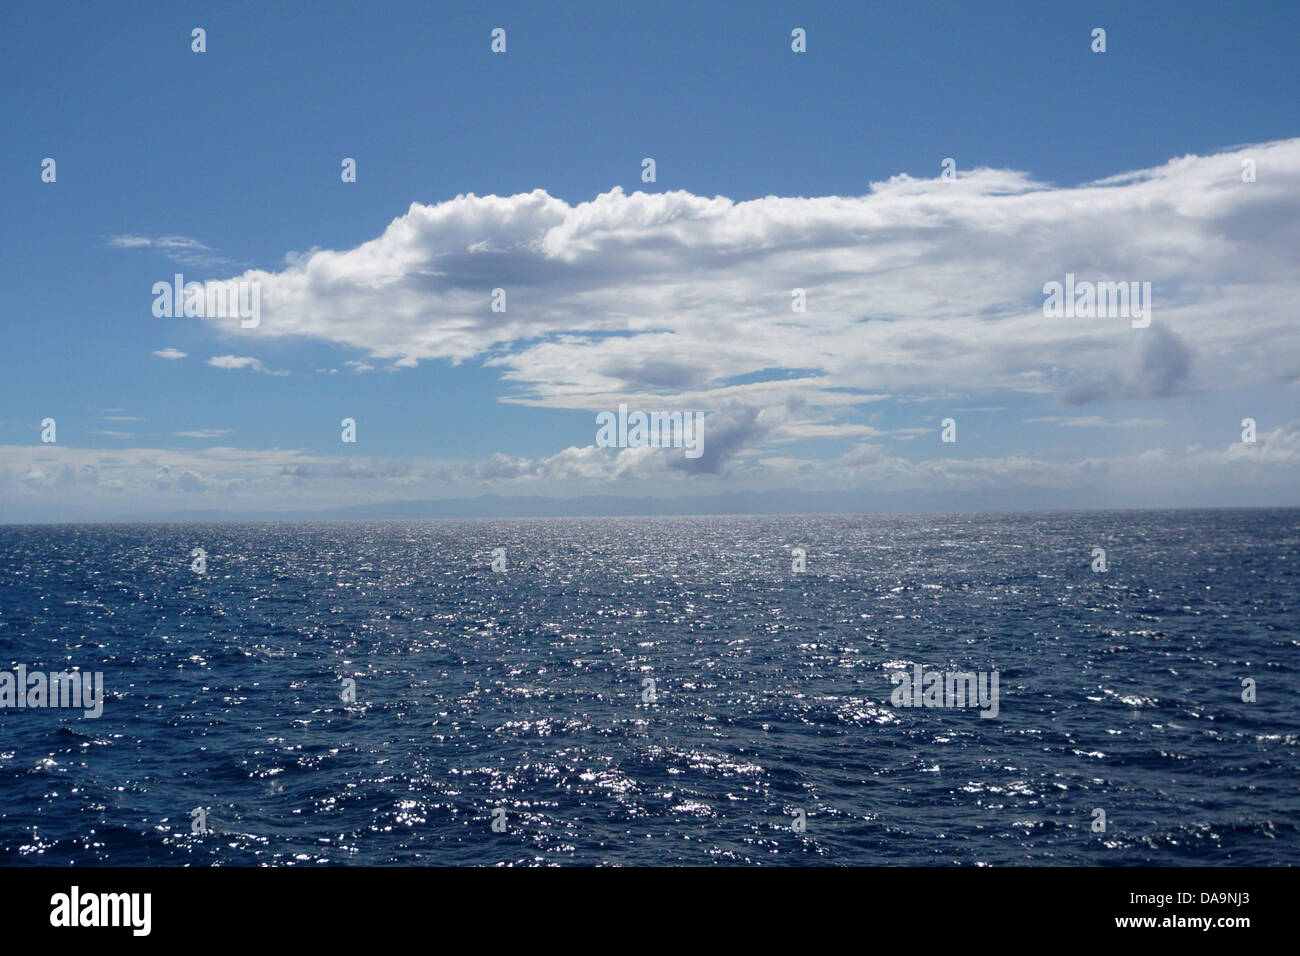 L'Italia, Europa, Lipari, Isole Eolie, isole, isolette, il mare, le onde, panorama, nuvole Foto Stock